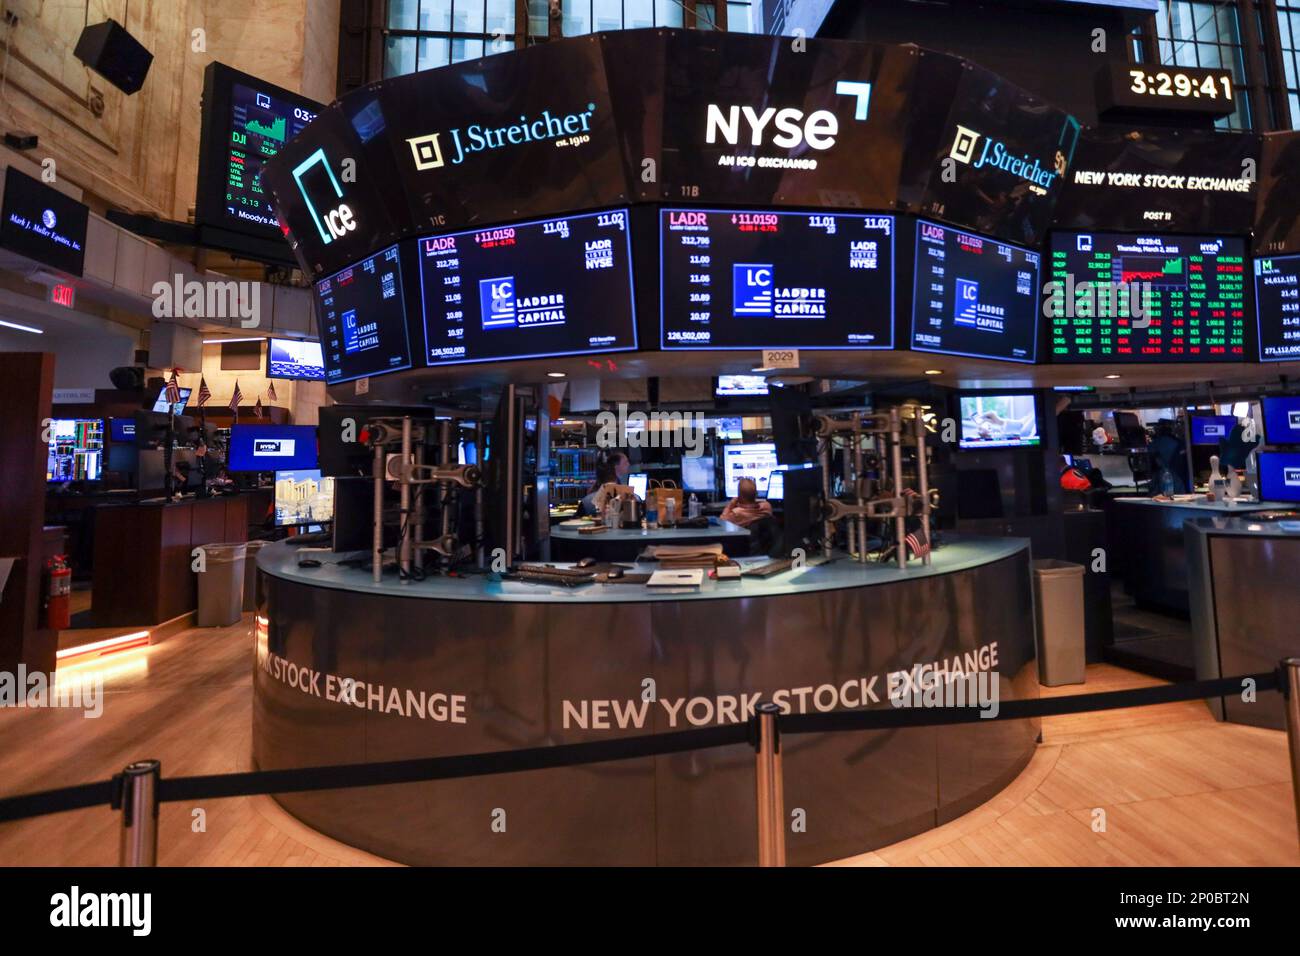 107021002-NYSE-Trading-Floor-OB-Photo-220225-CC-PRESS-10.jpg?quality=85&strip=all&fit=3000,2000